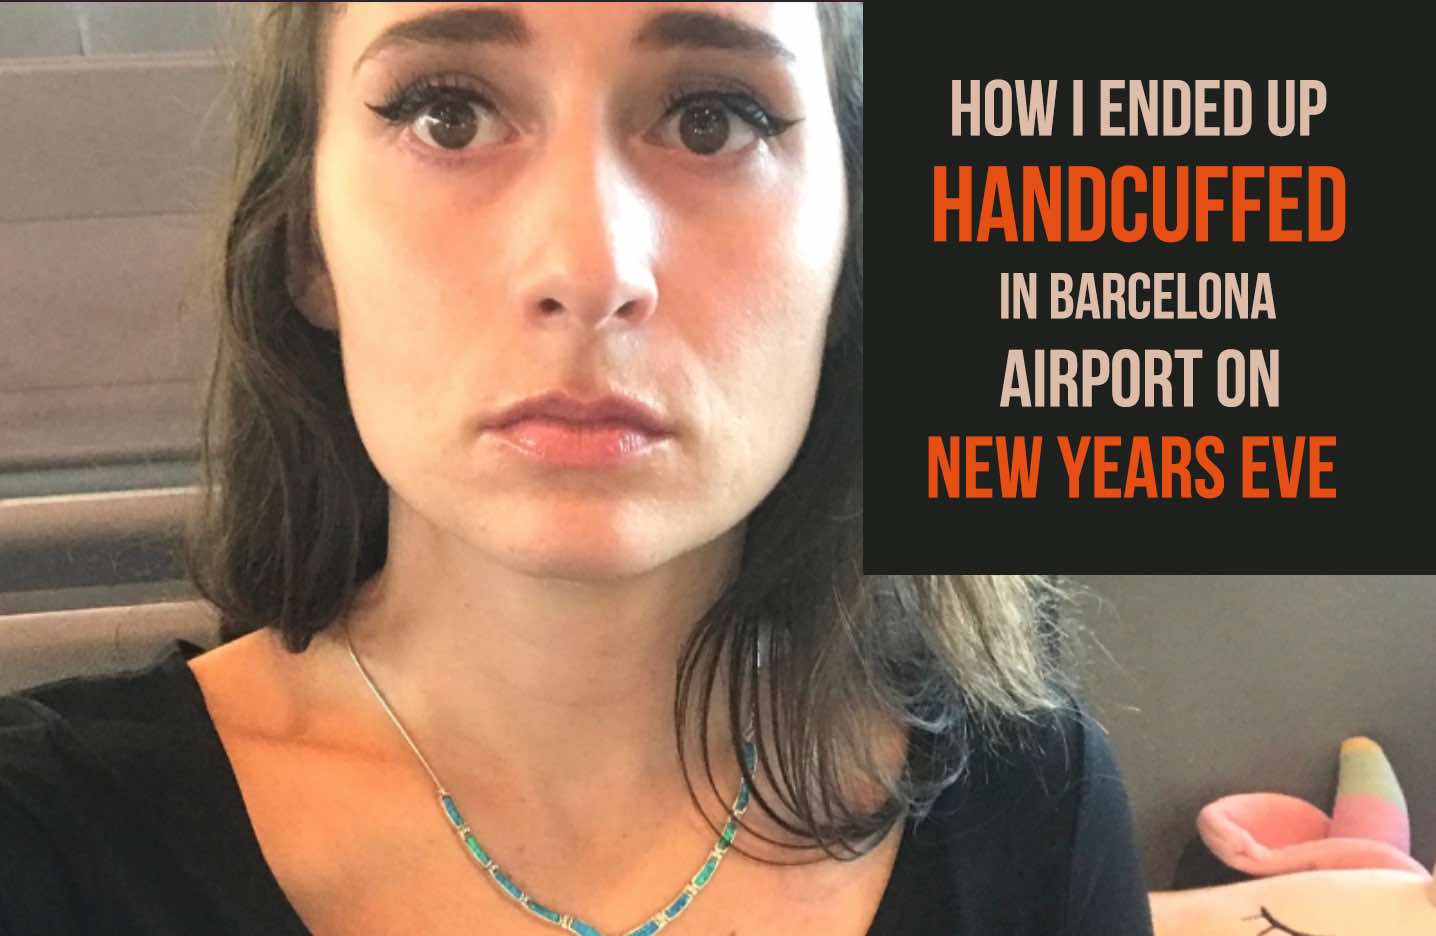 Handcuffed in Barcelona airport